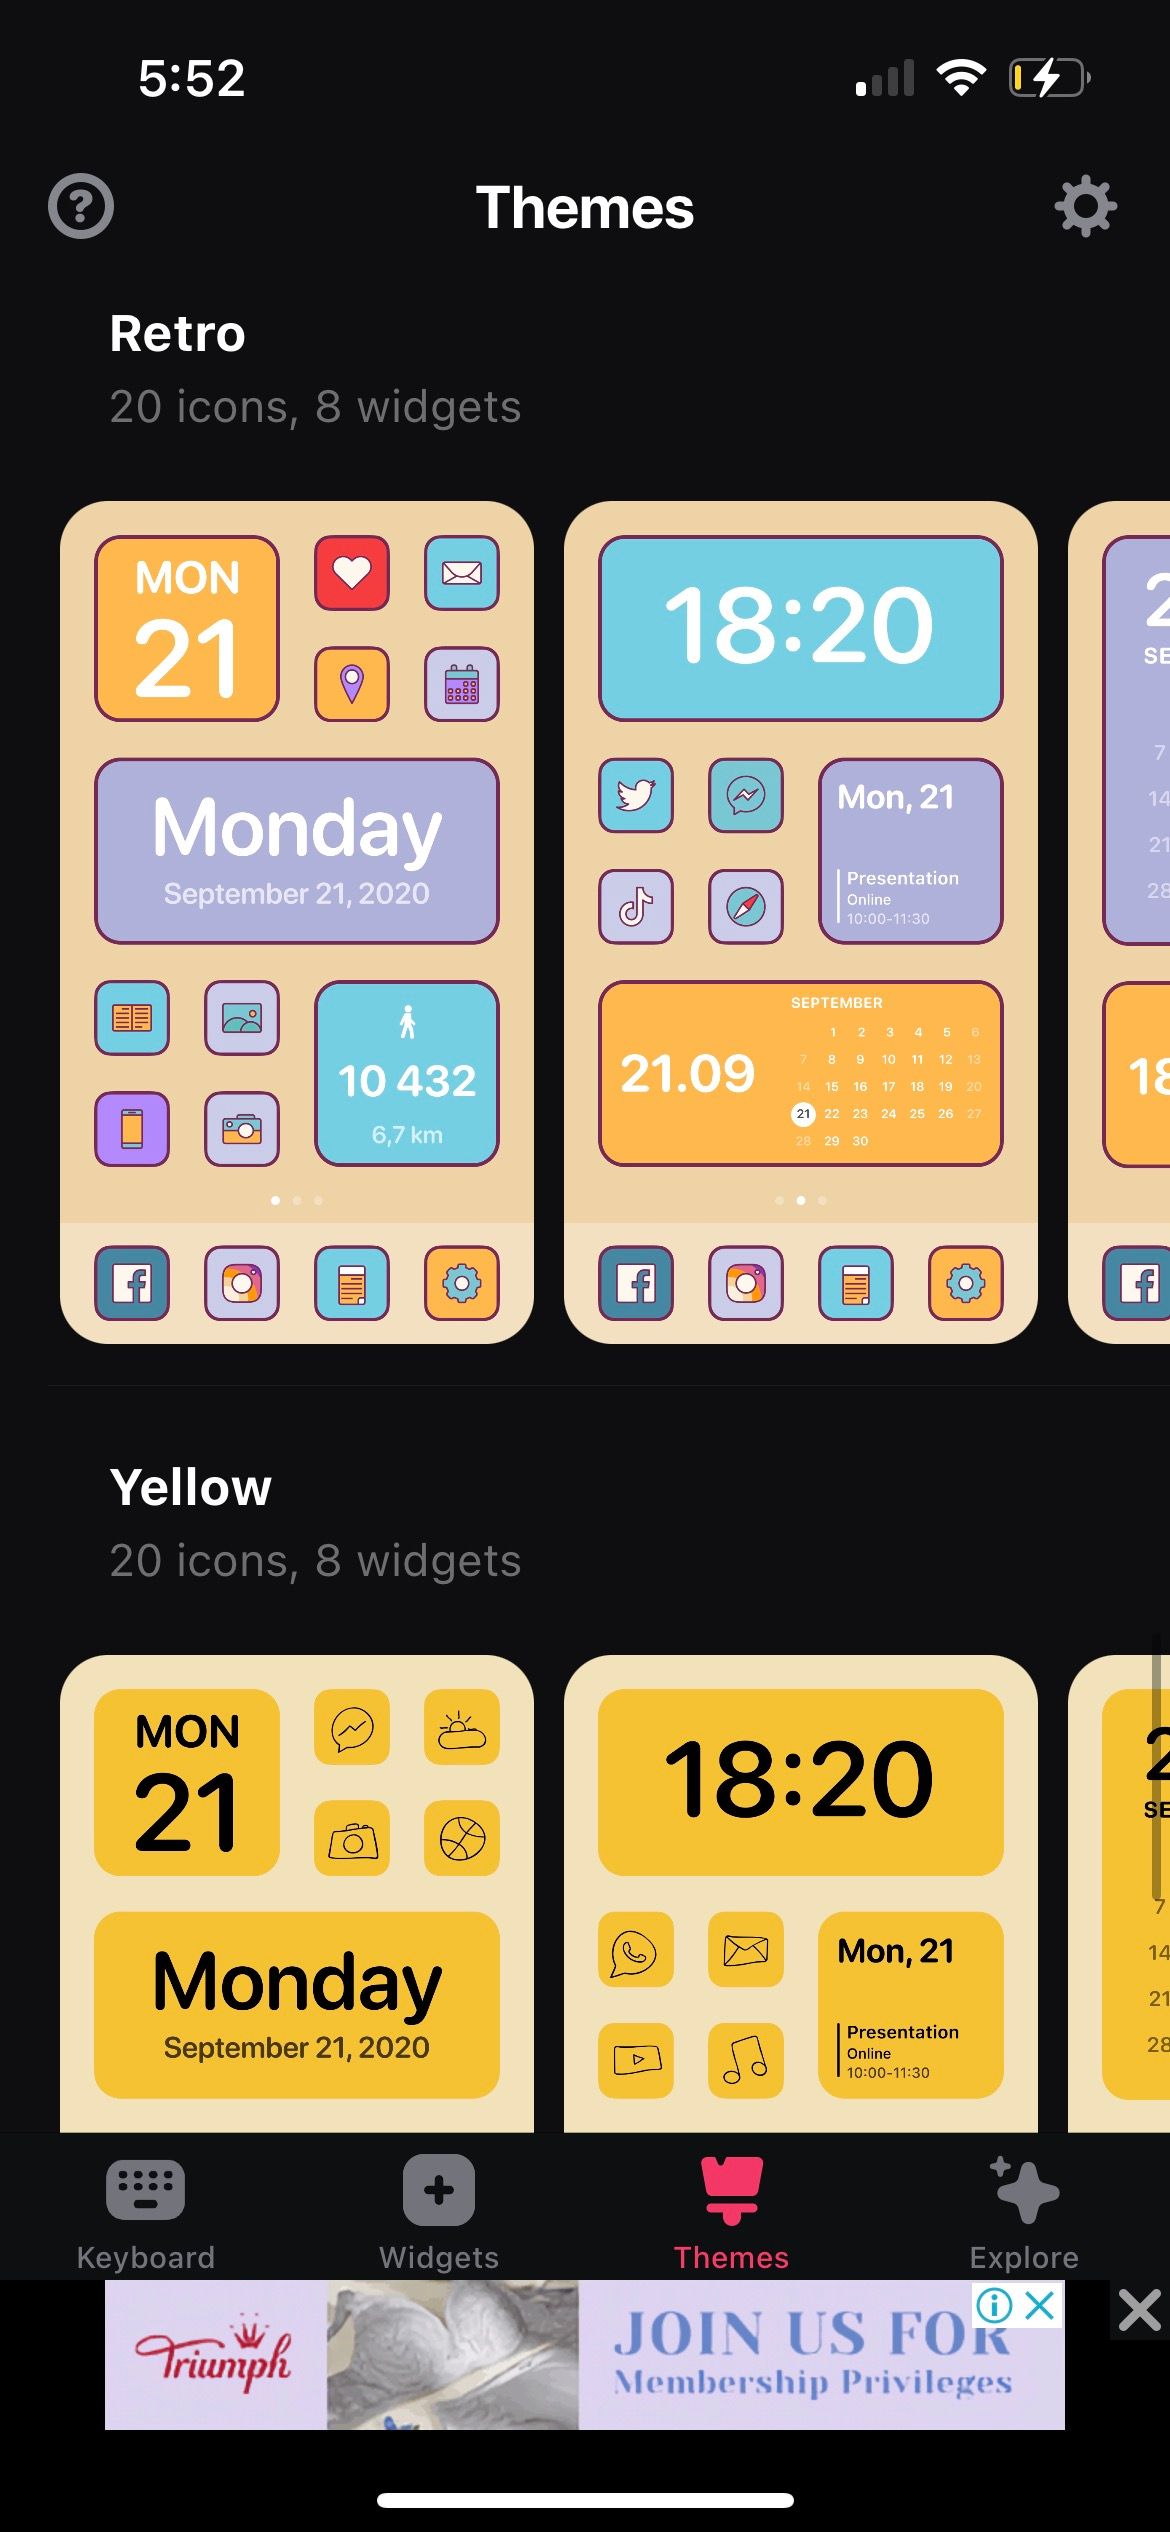 widgetbox app retro and yellow themes